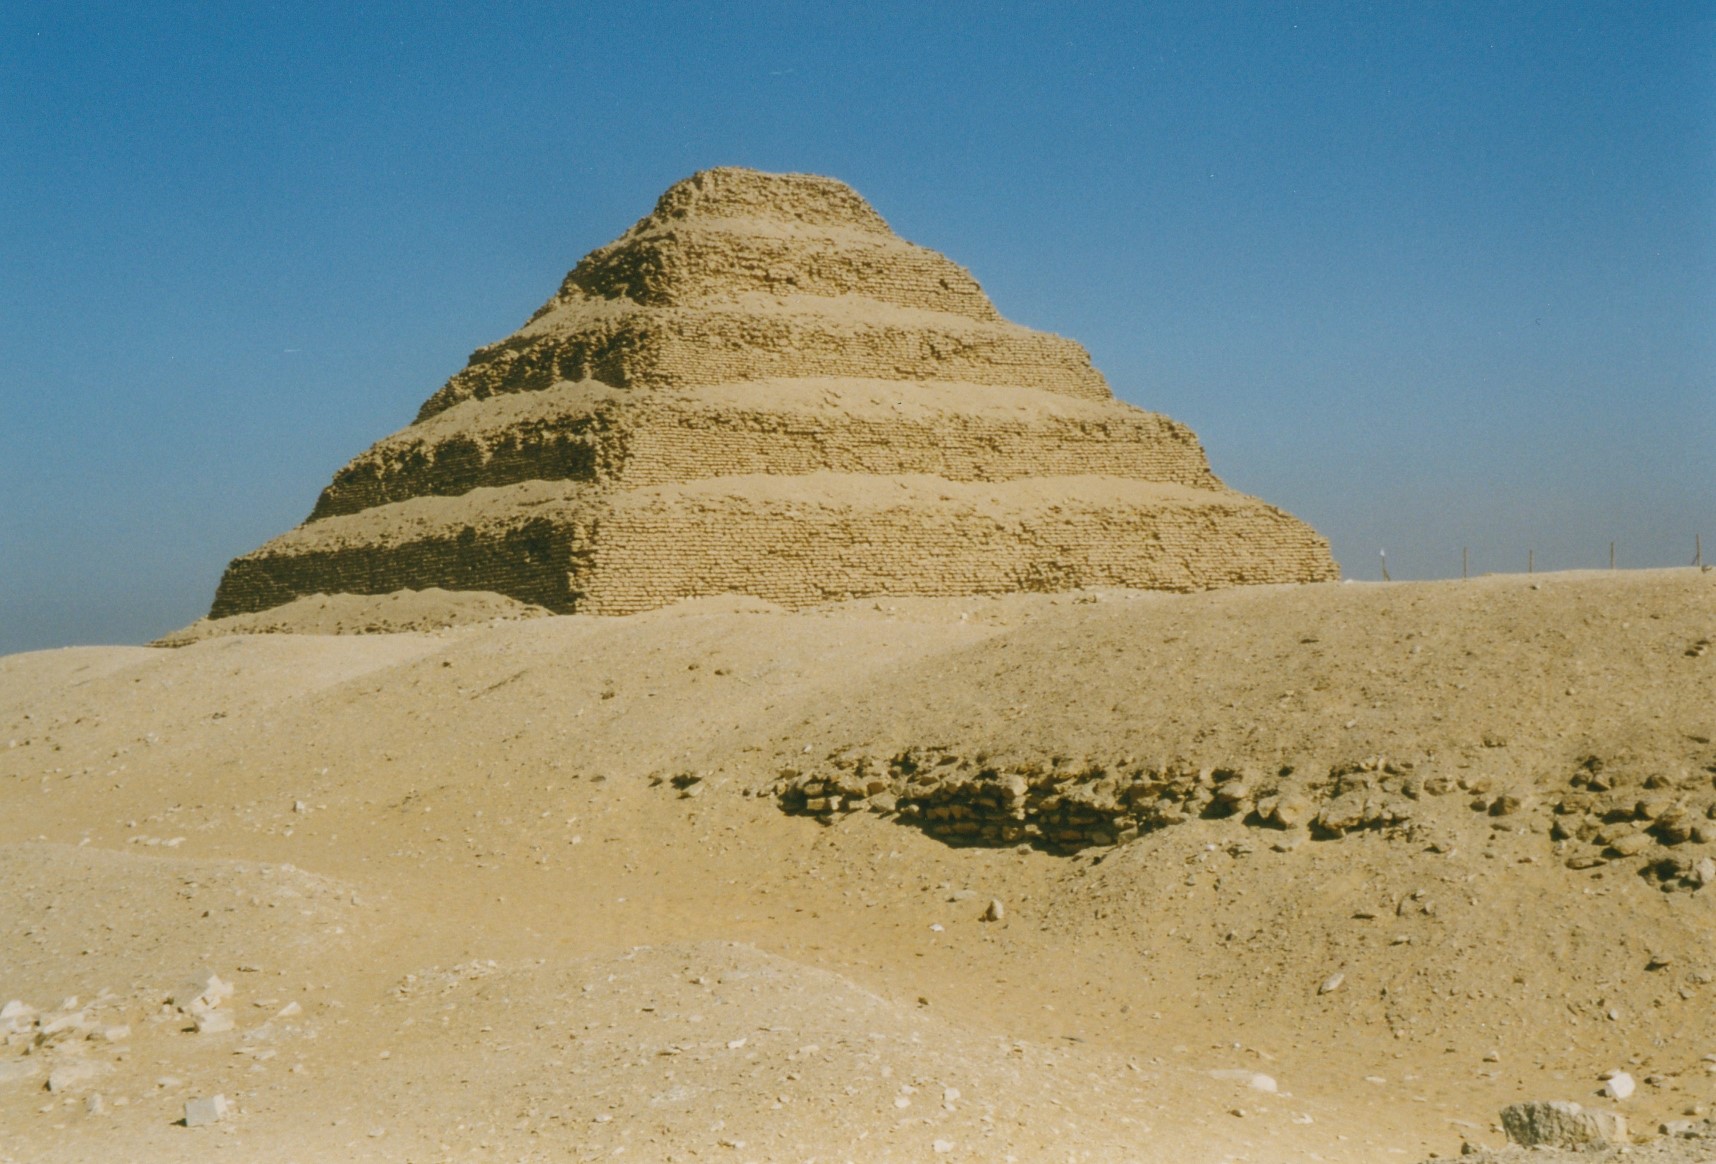 A pyramid